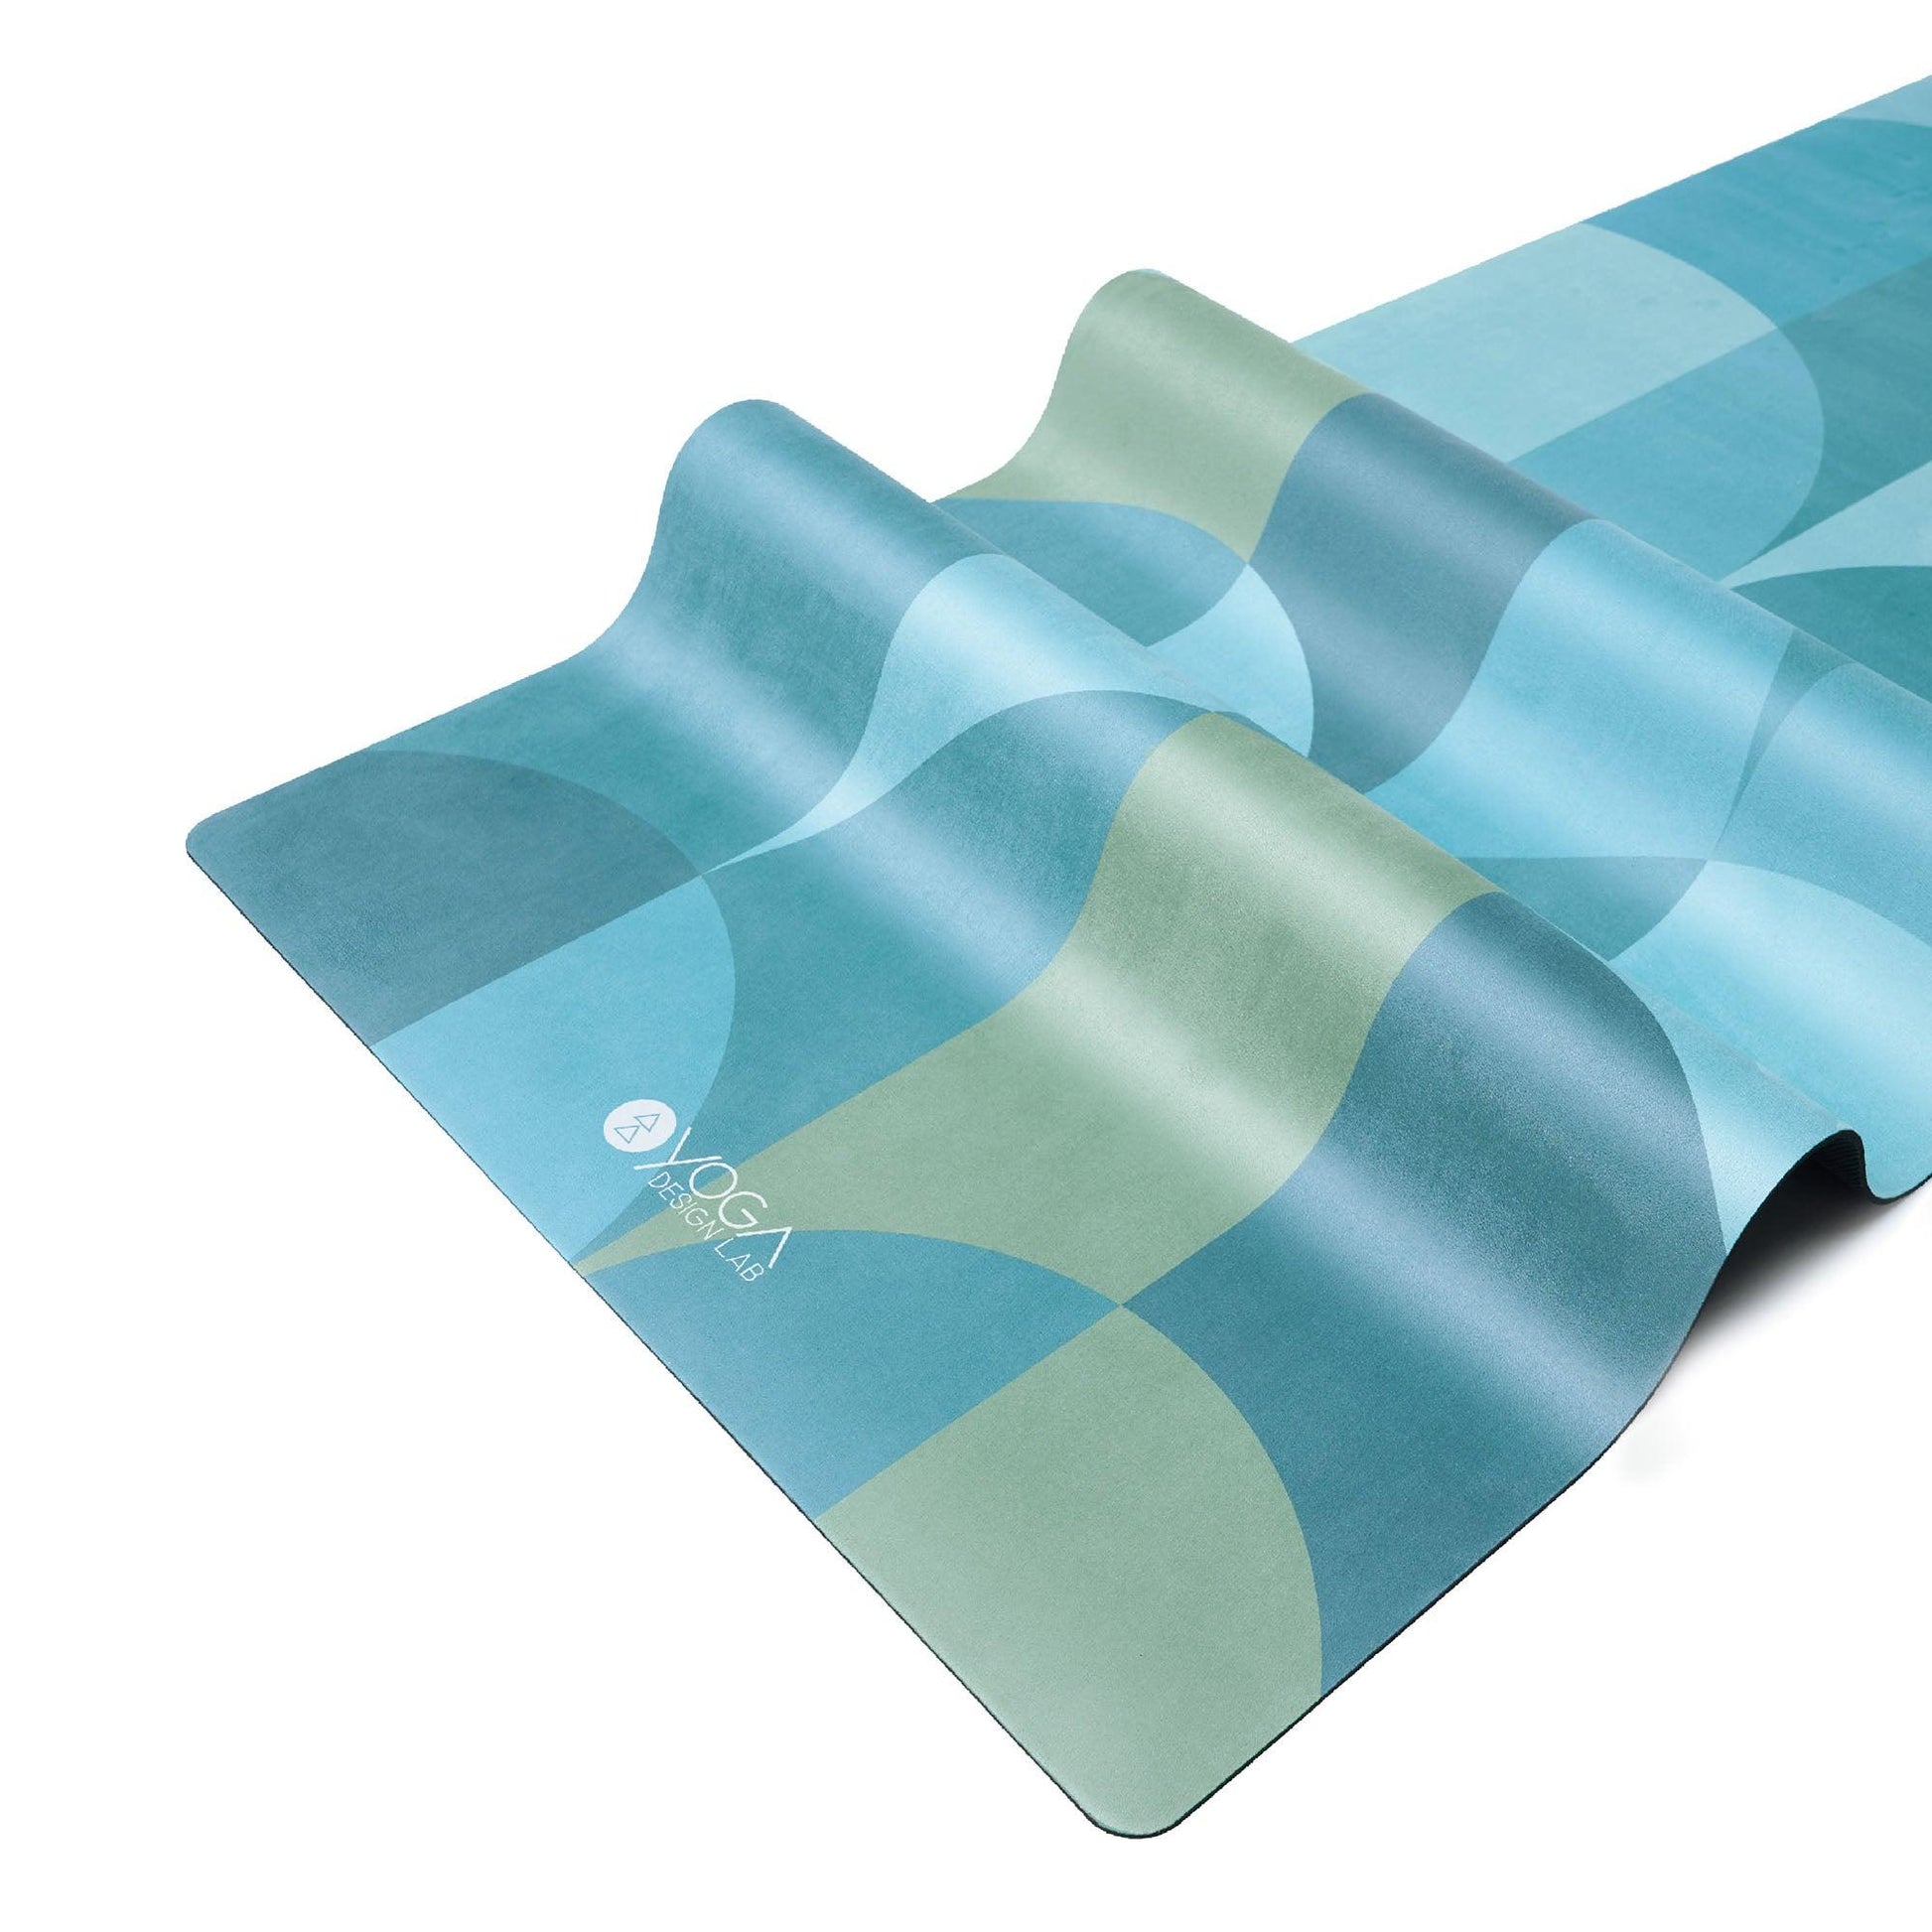 Combo Yoga Mat: 2-in-1 (Mat + Towel) - Rise - Lightweight & Ultra-Soft - Yoga Design Lab 